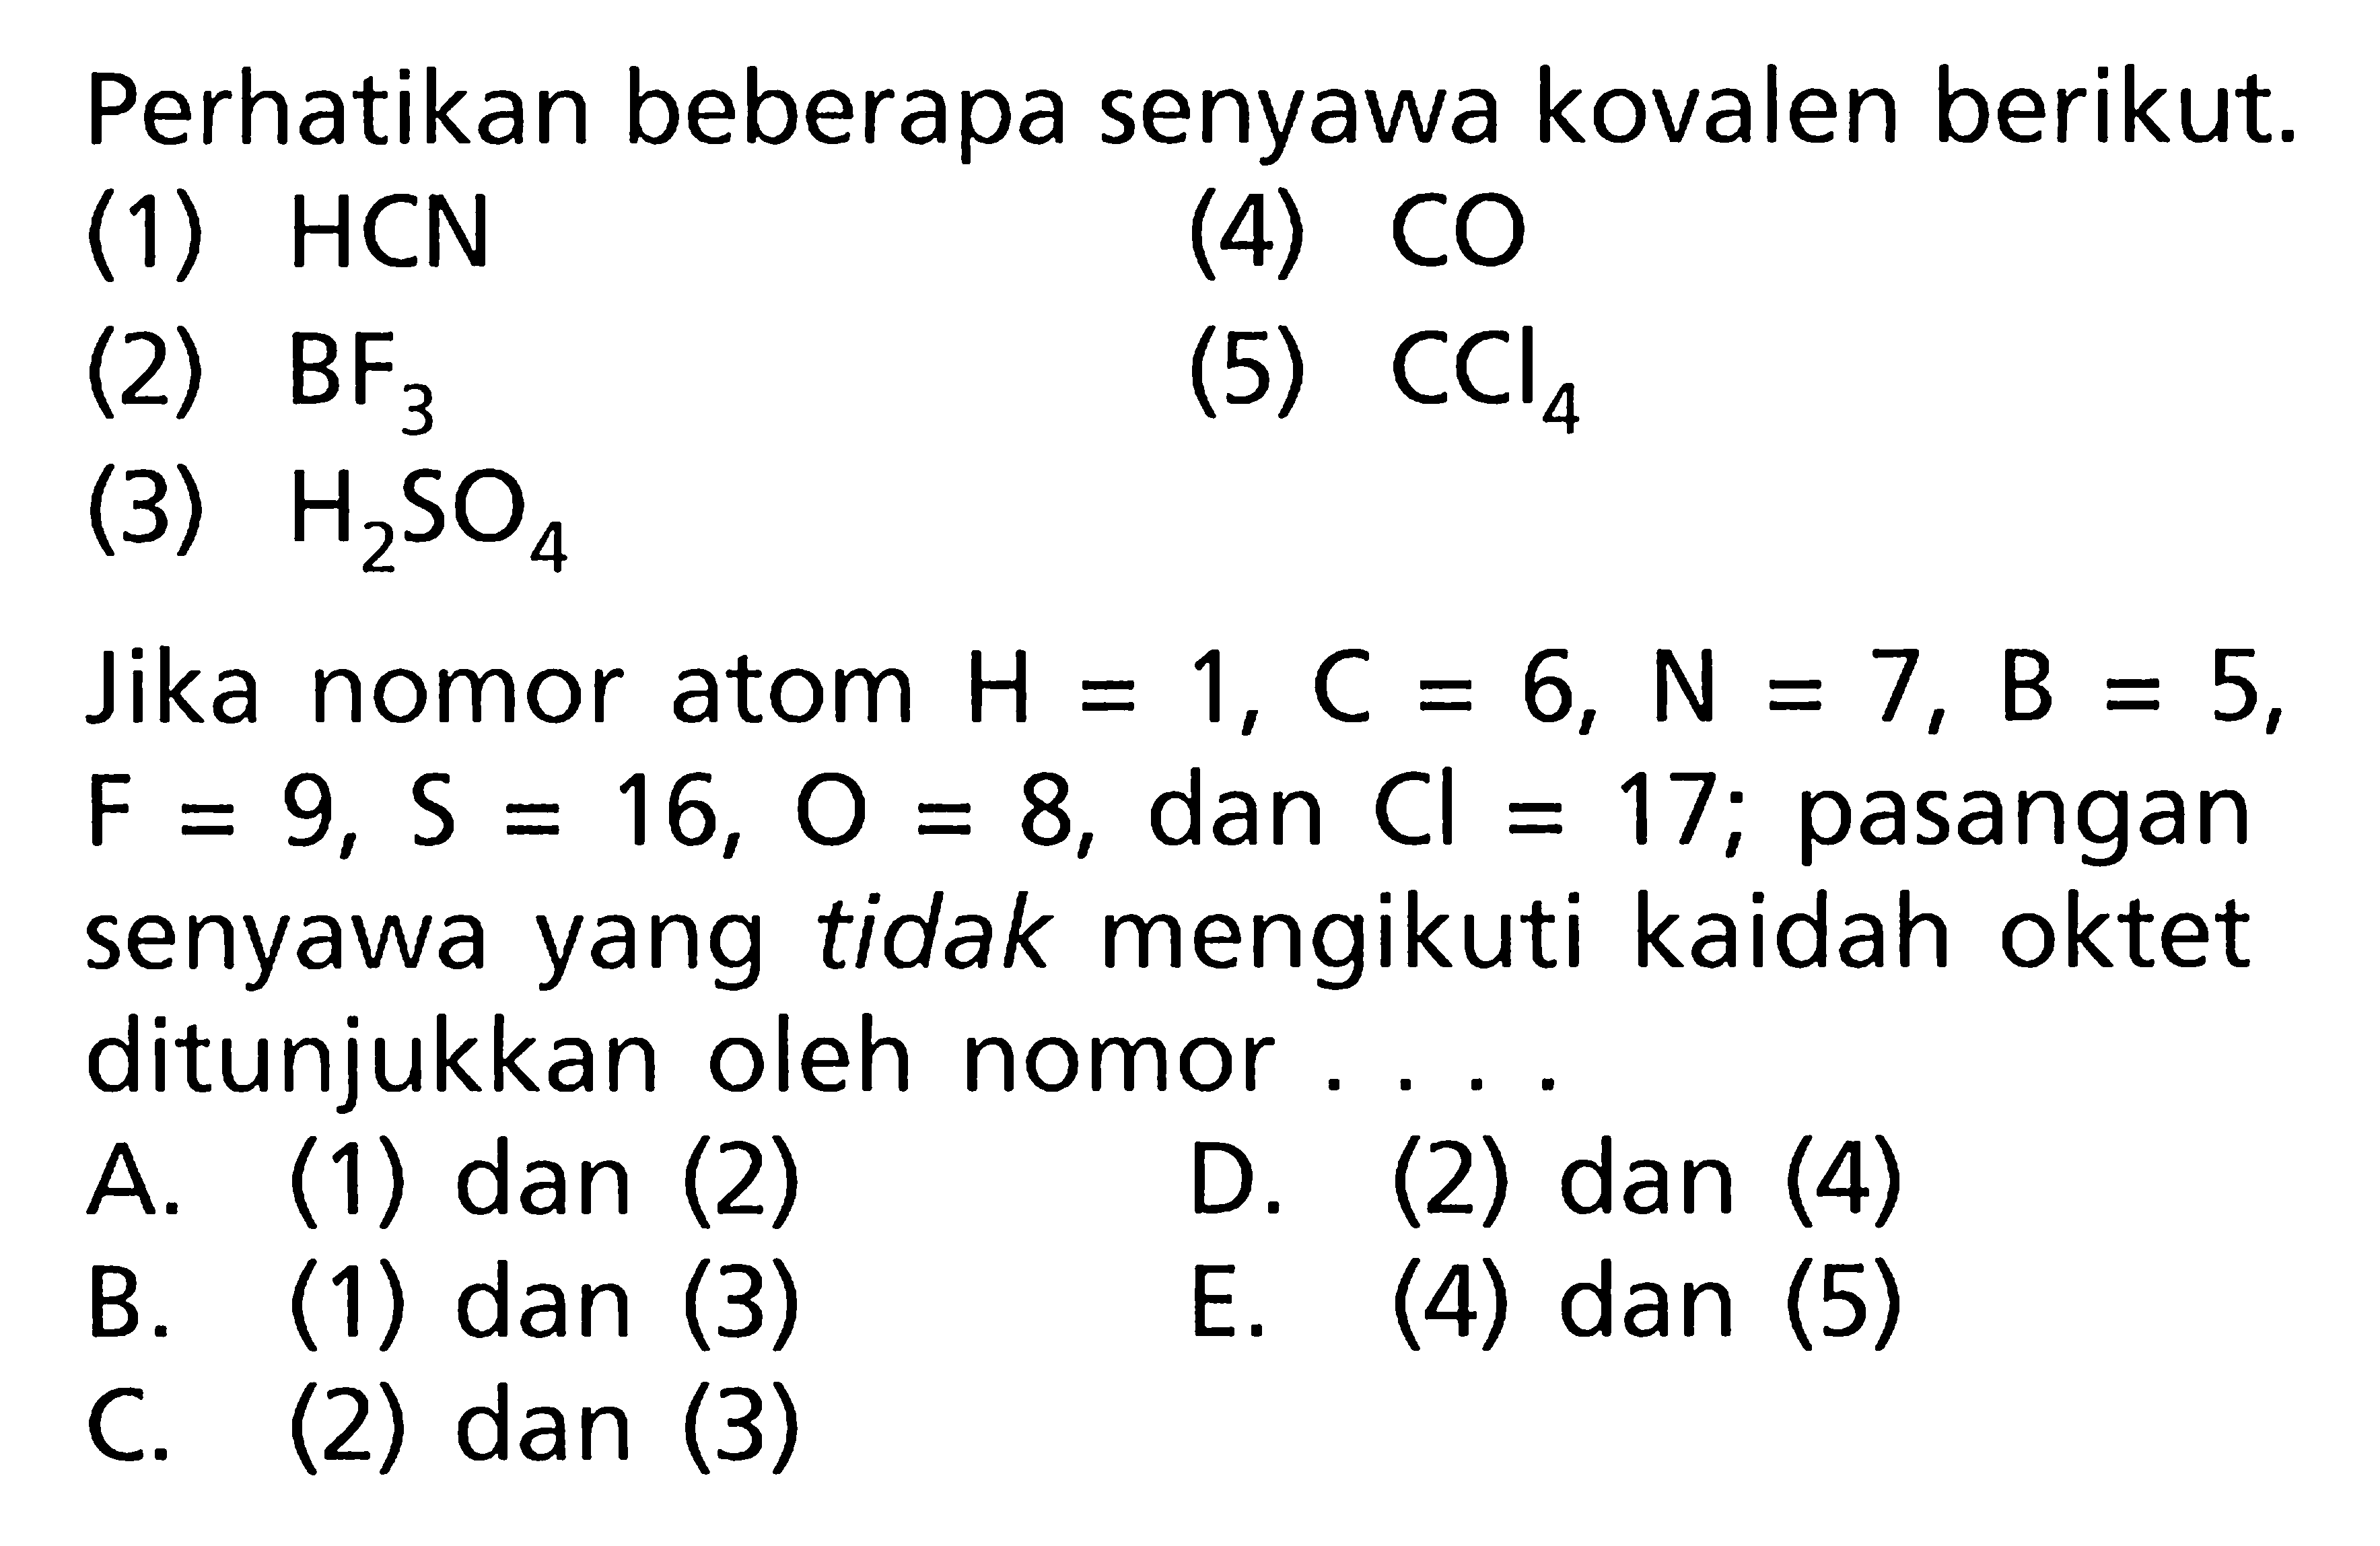 Perhatikan beberapa senyawa kovalen berikut. (1) HCN (4) CO (2) BF3 (5) CCl4 (3) H2SO4 Jika nomor atom H = 1, C = 6, N = 7, B = 5, F = 9, S = 16, 0 = 8, dan Cl = 17; pasangan senyawa yang tidak mengikuti kaidah oktet ditunjukkan oleh nomor ...